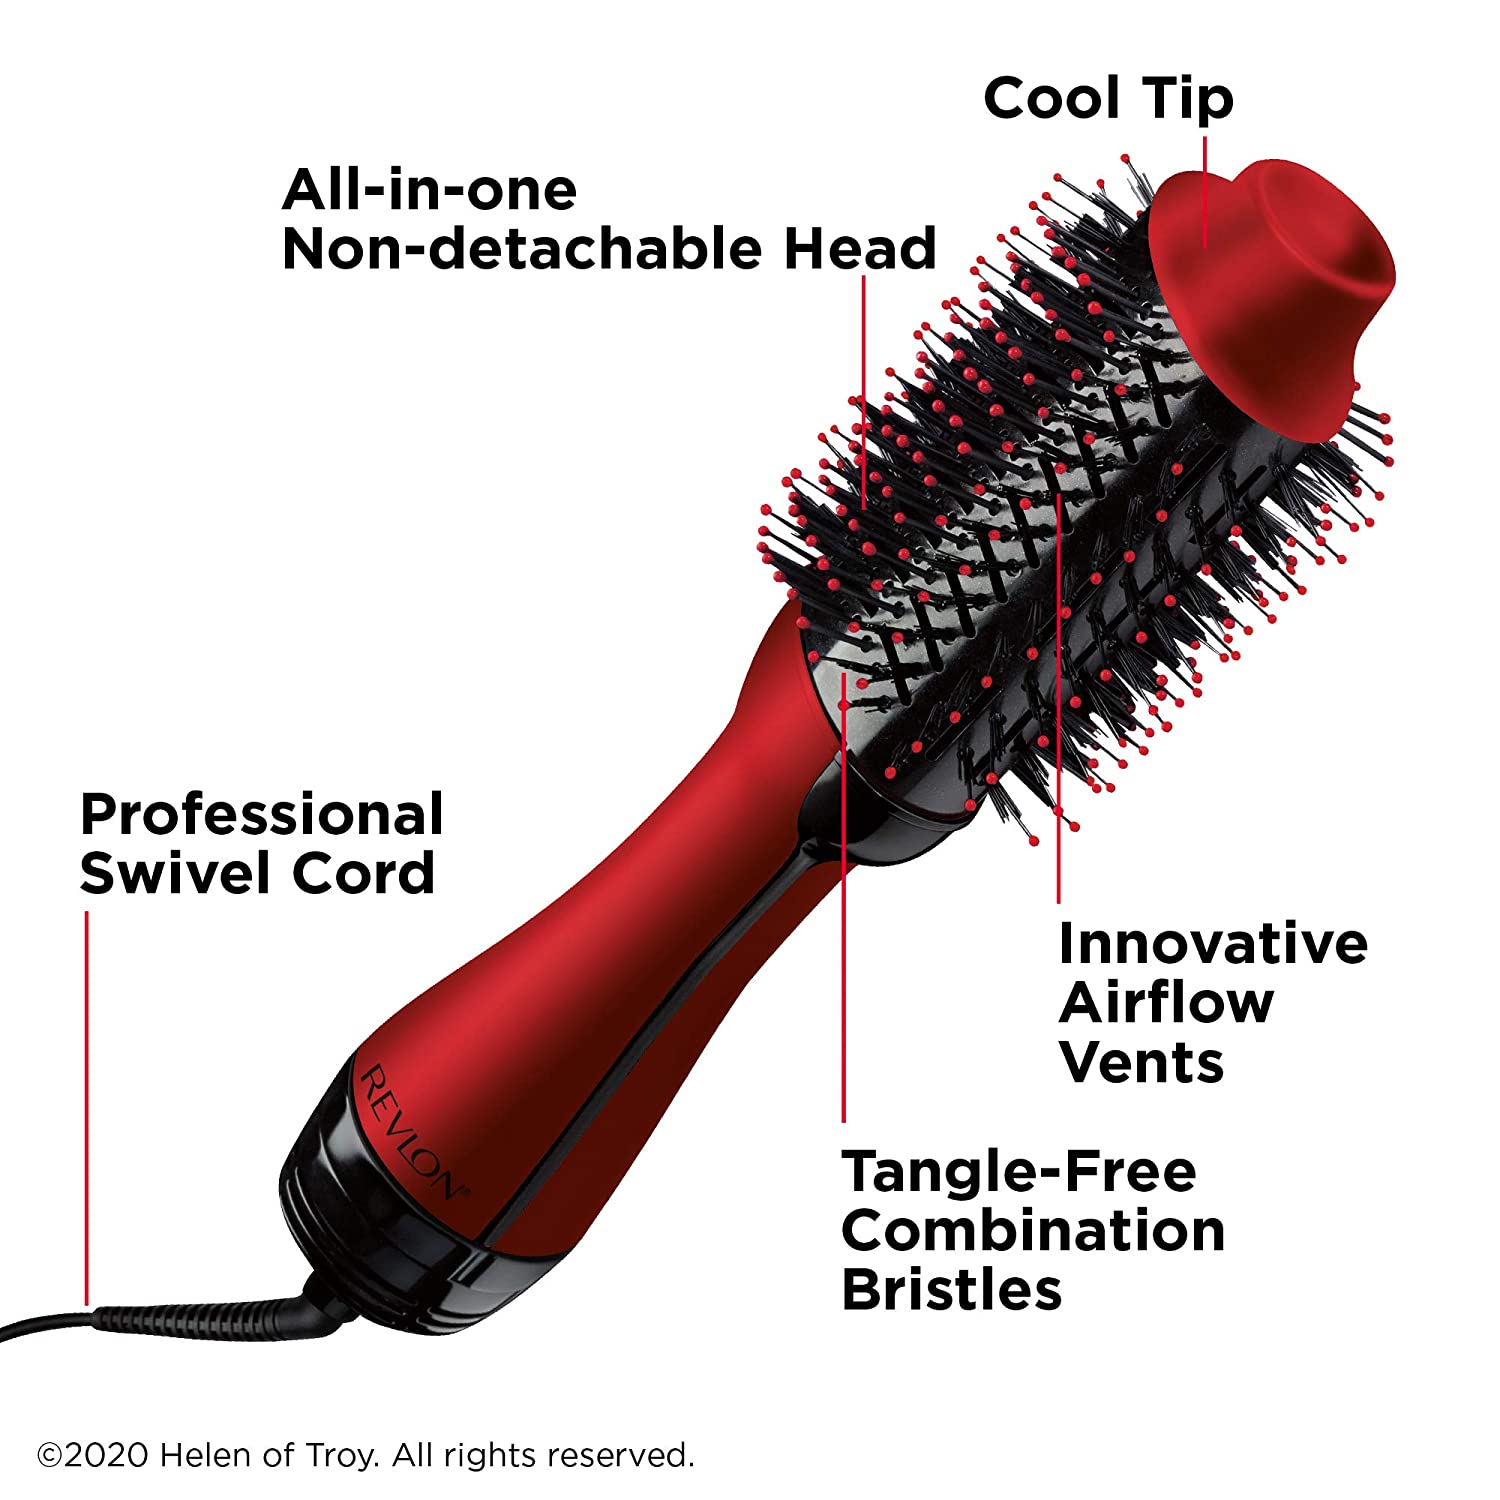 REVLON One-Step Volumizer Original 1.0 Hair Dryer and Hot Air Brush, Black  : Beauty & Personal Care 